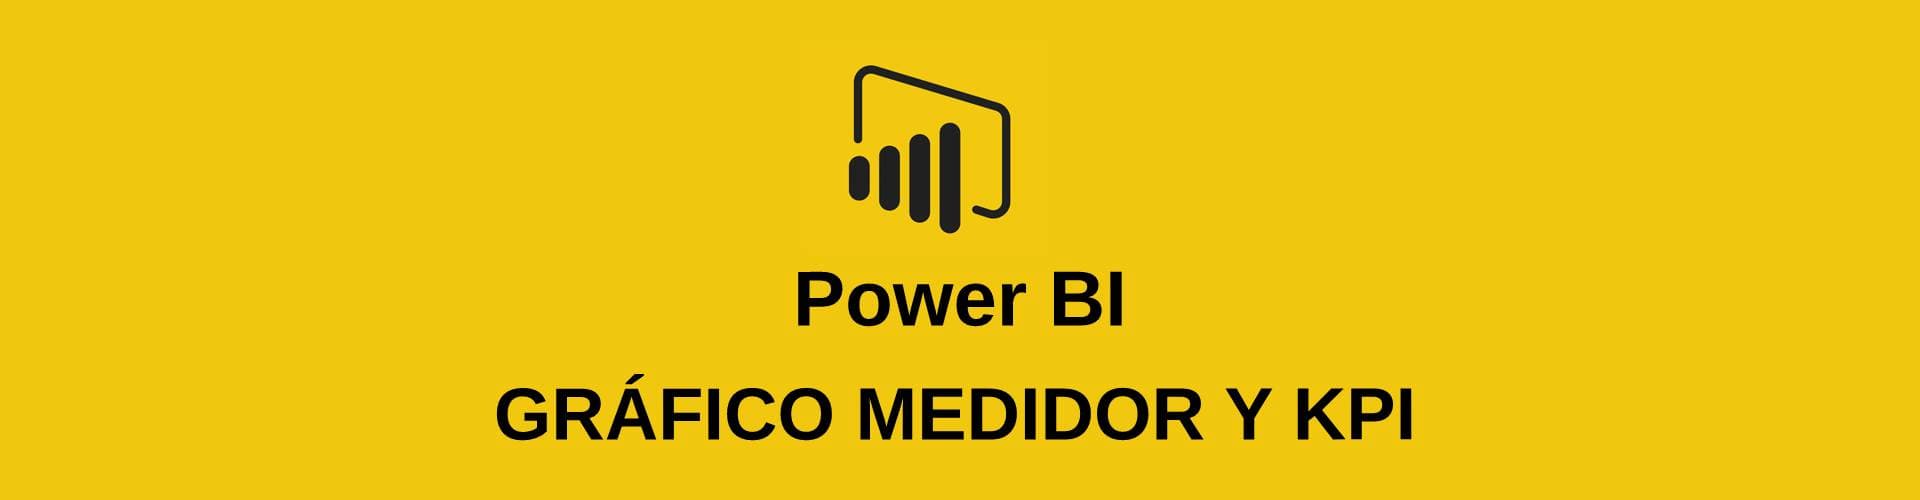 power-bi-graficos-medidor-kpi